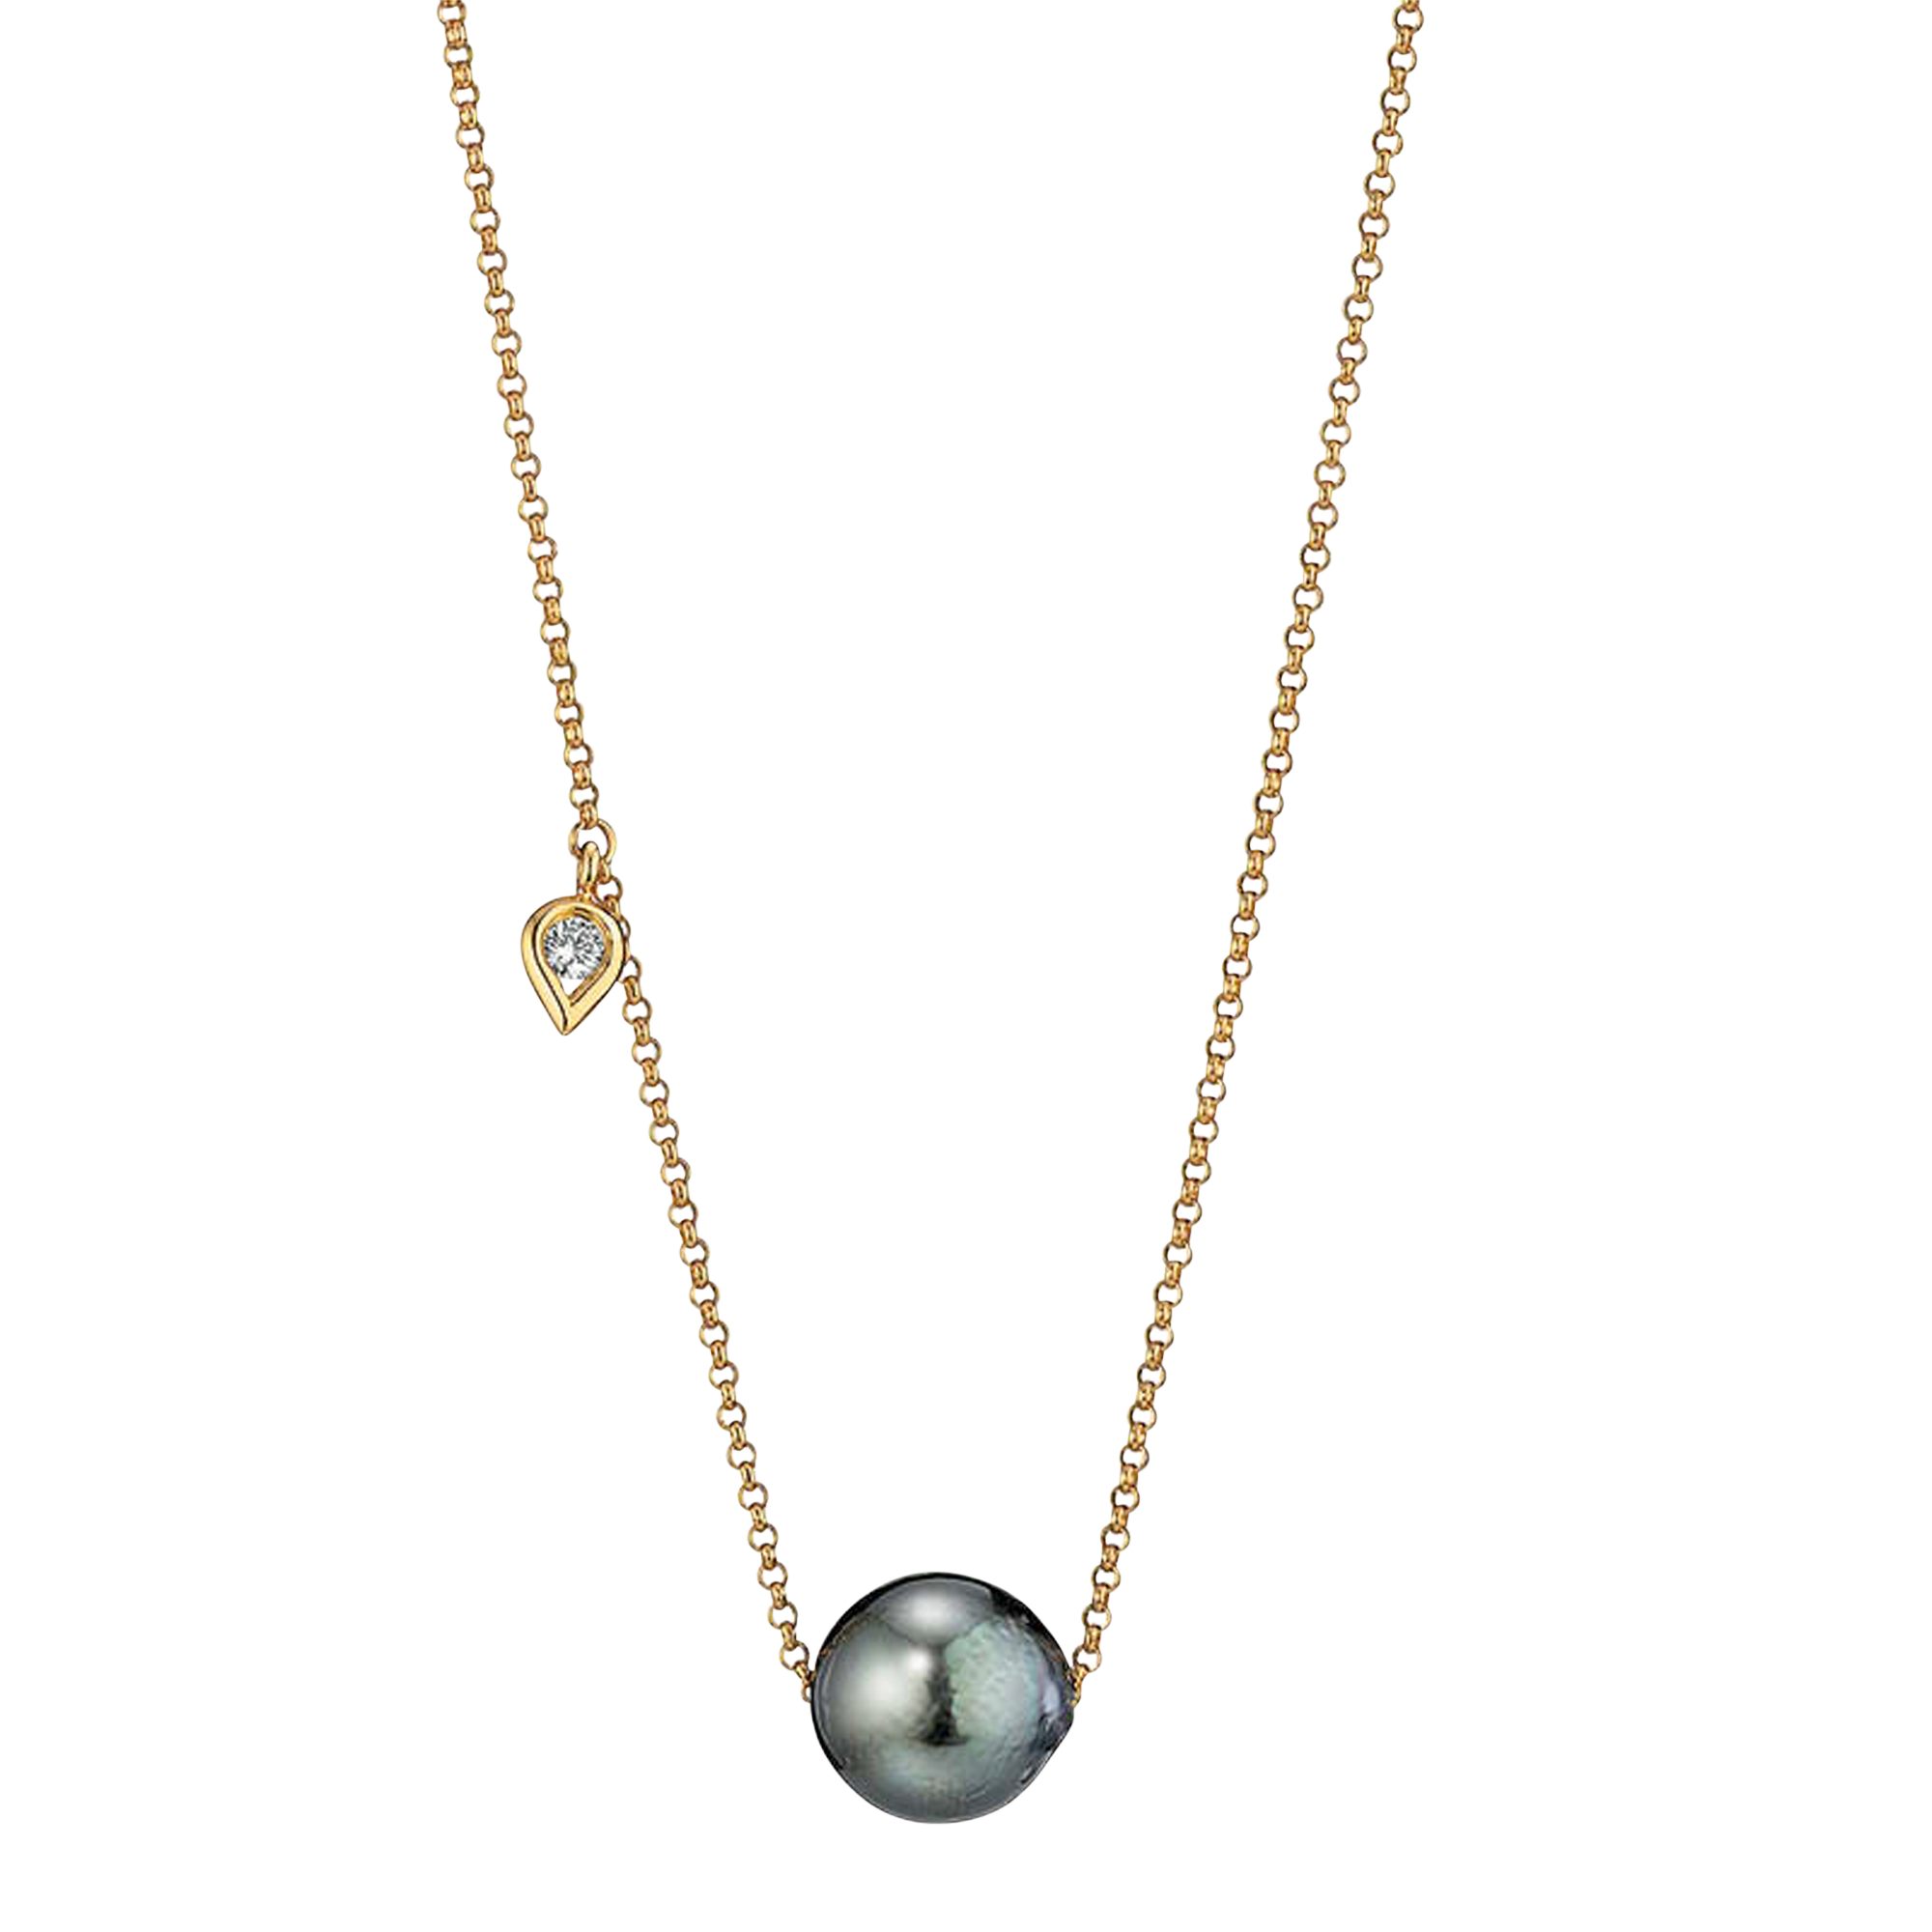 Gellner Bolero Necklace with Pendant